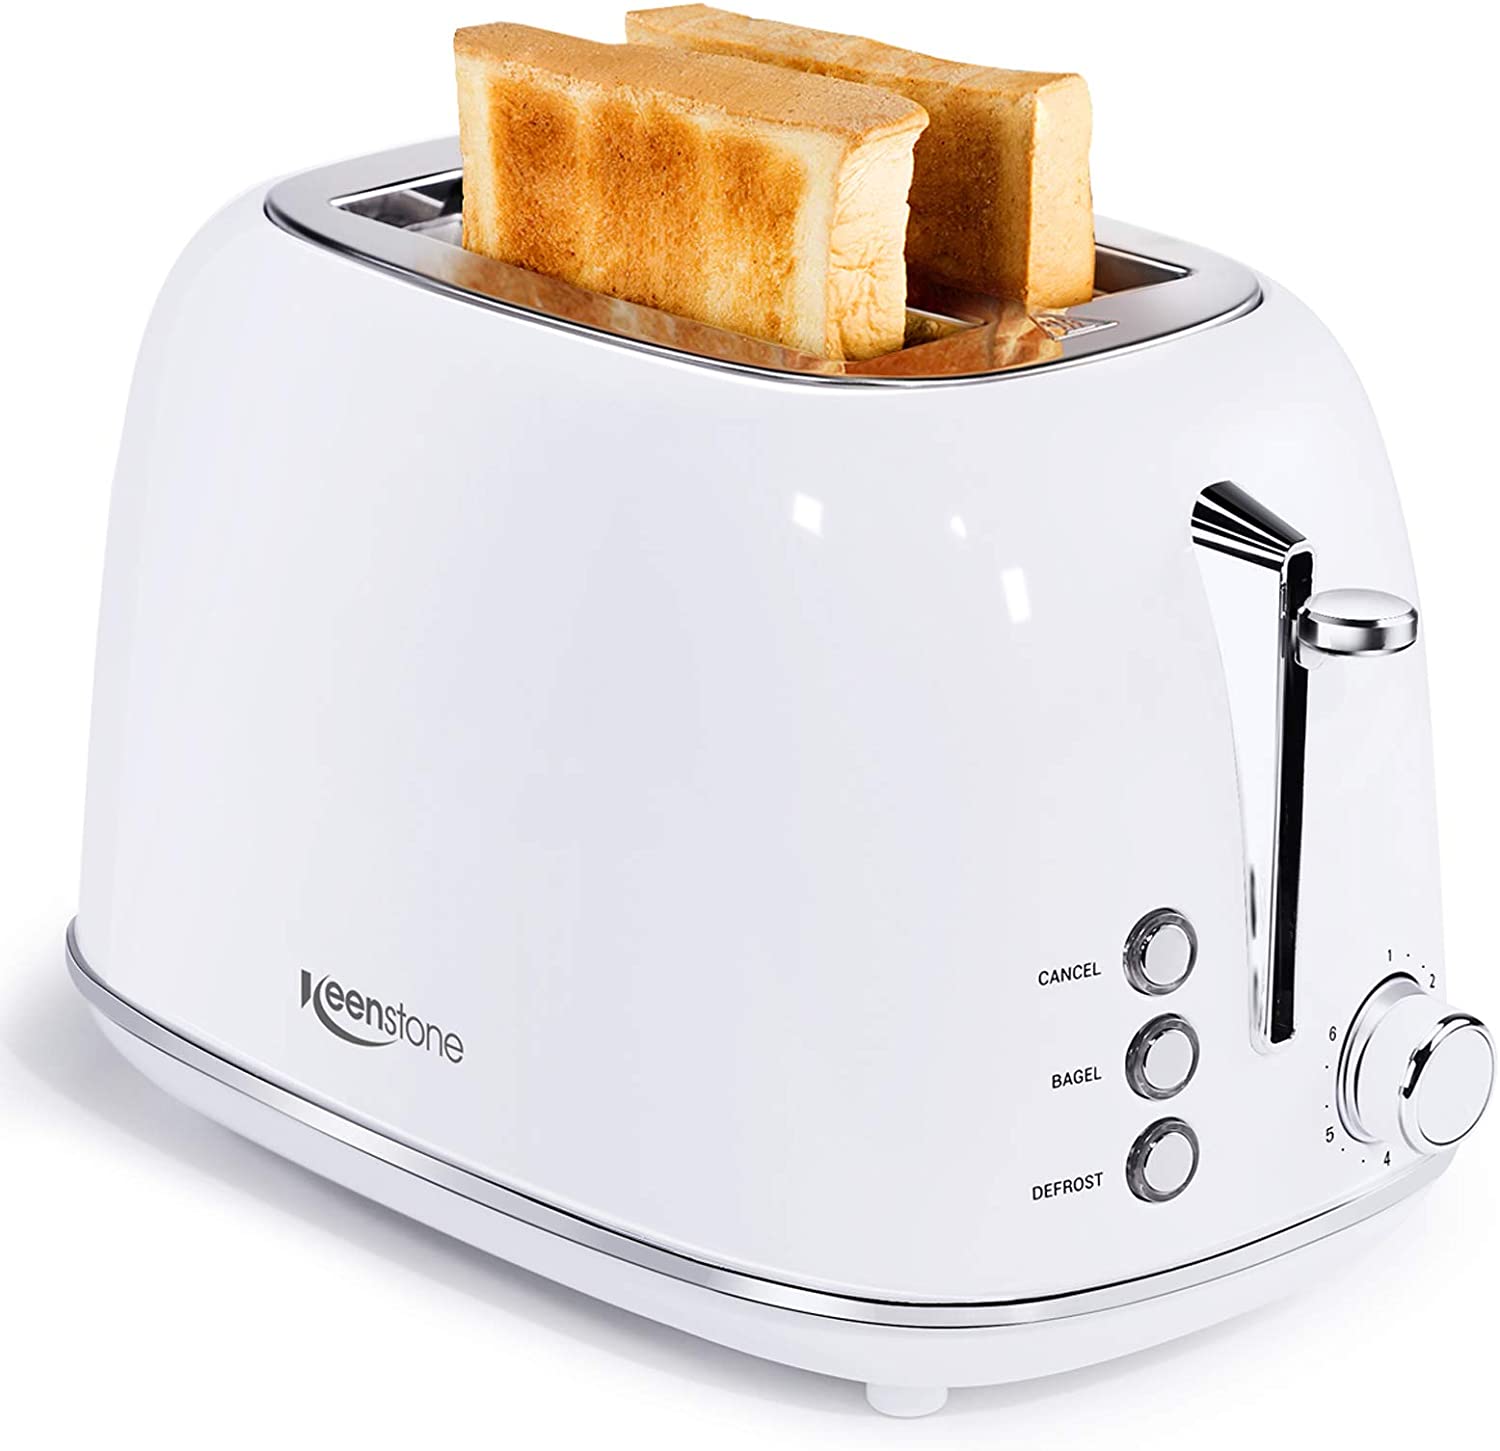 https://www.dontwasteyourmoney.com/wp-content/uploads/2022/07/keenstone-bpa-free-easy-clean-toaster-2-slice-toaster.jpg